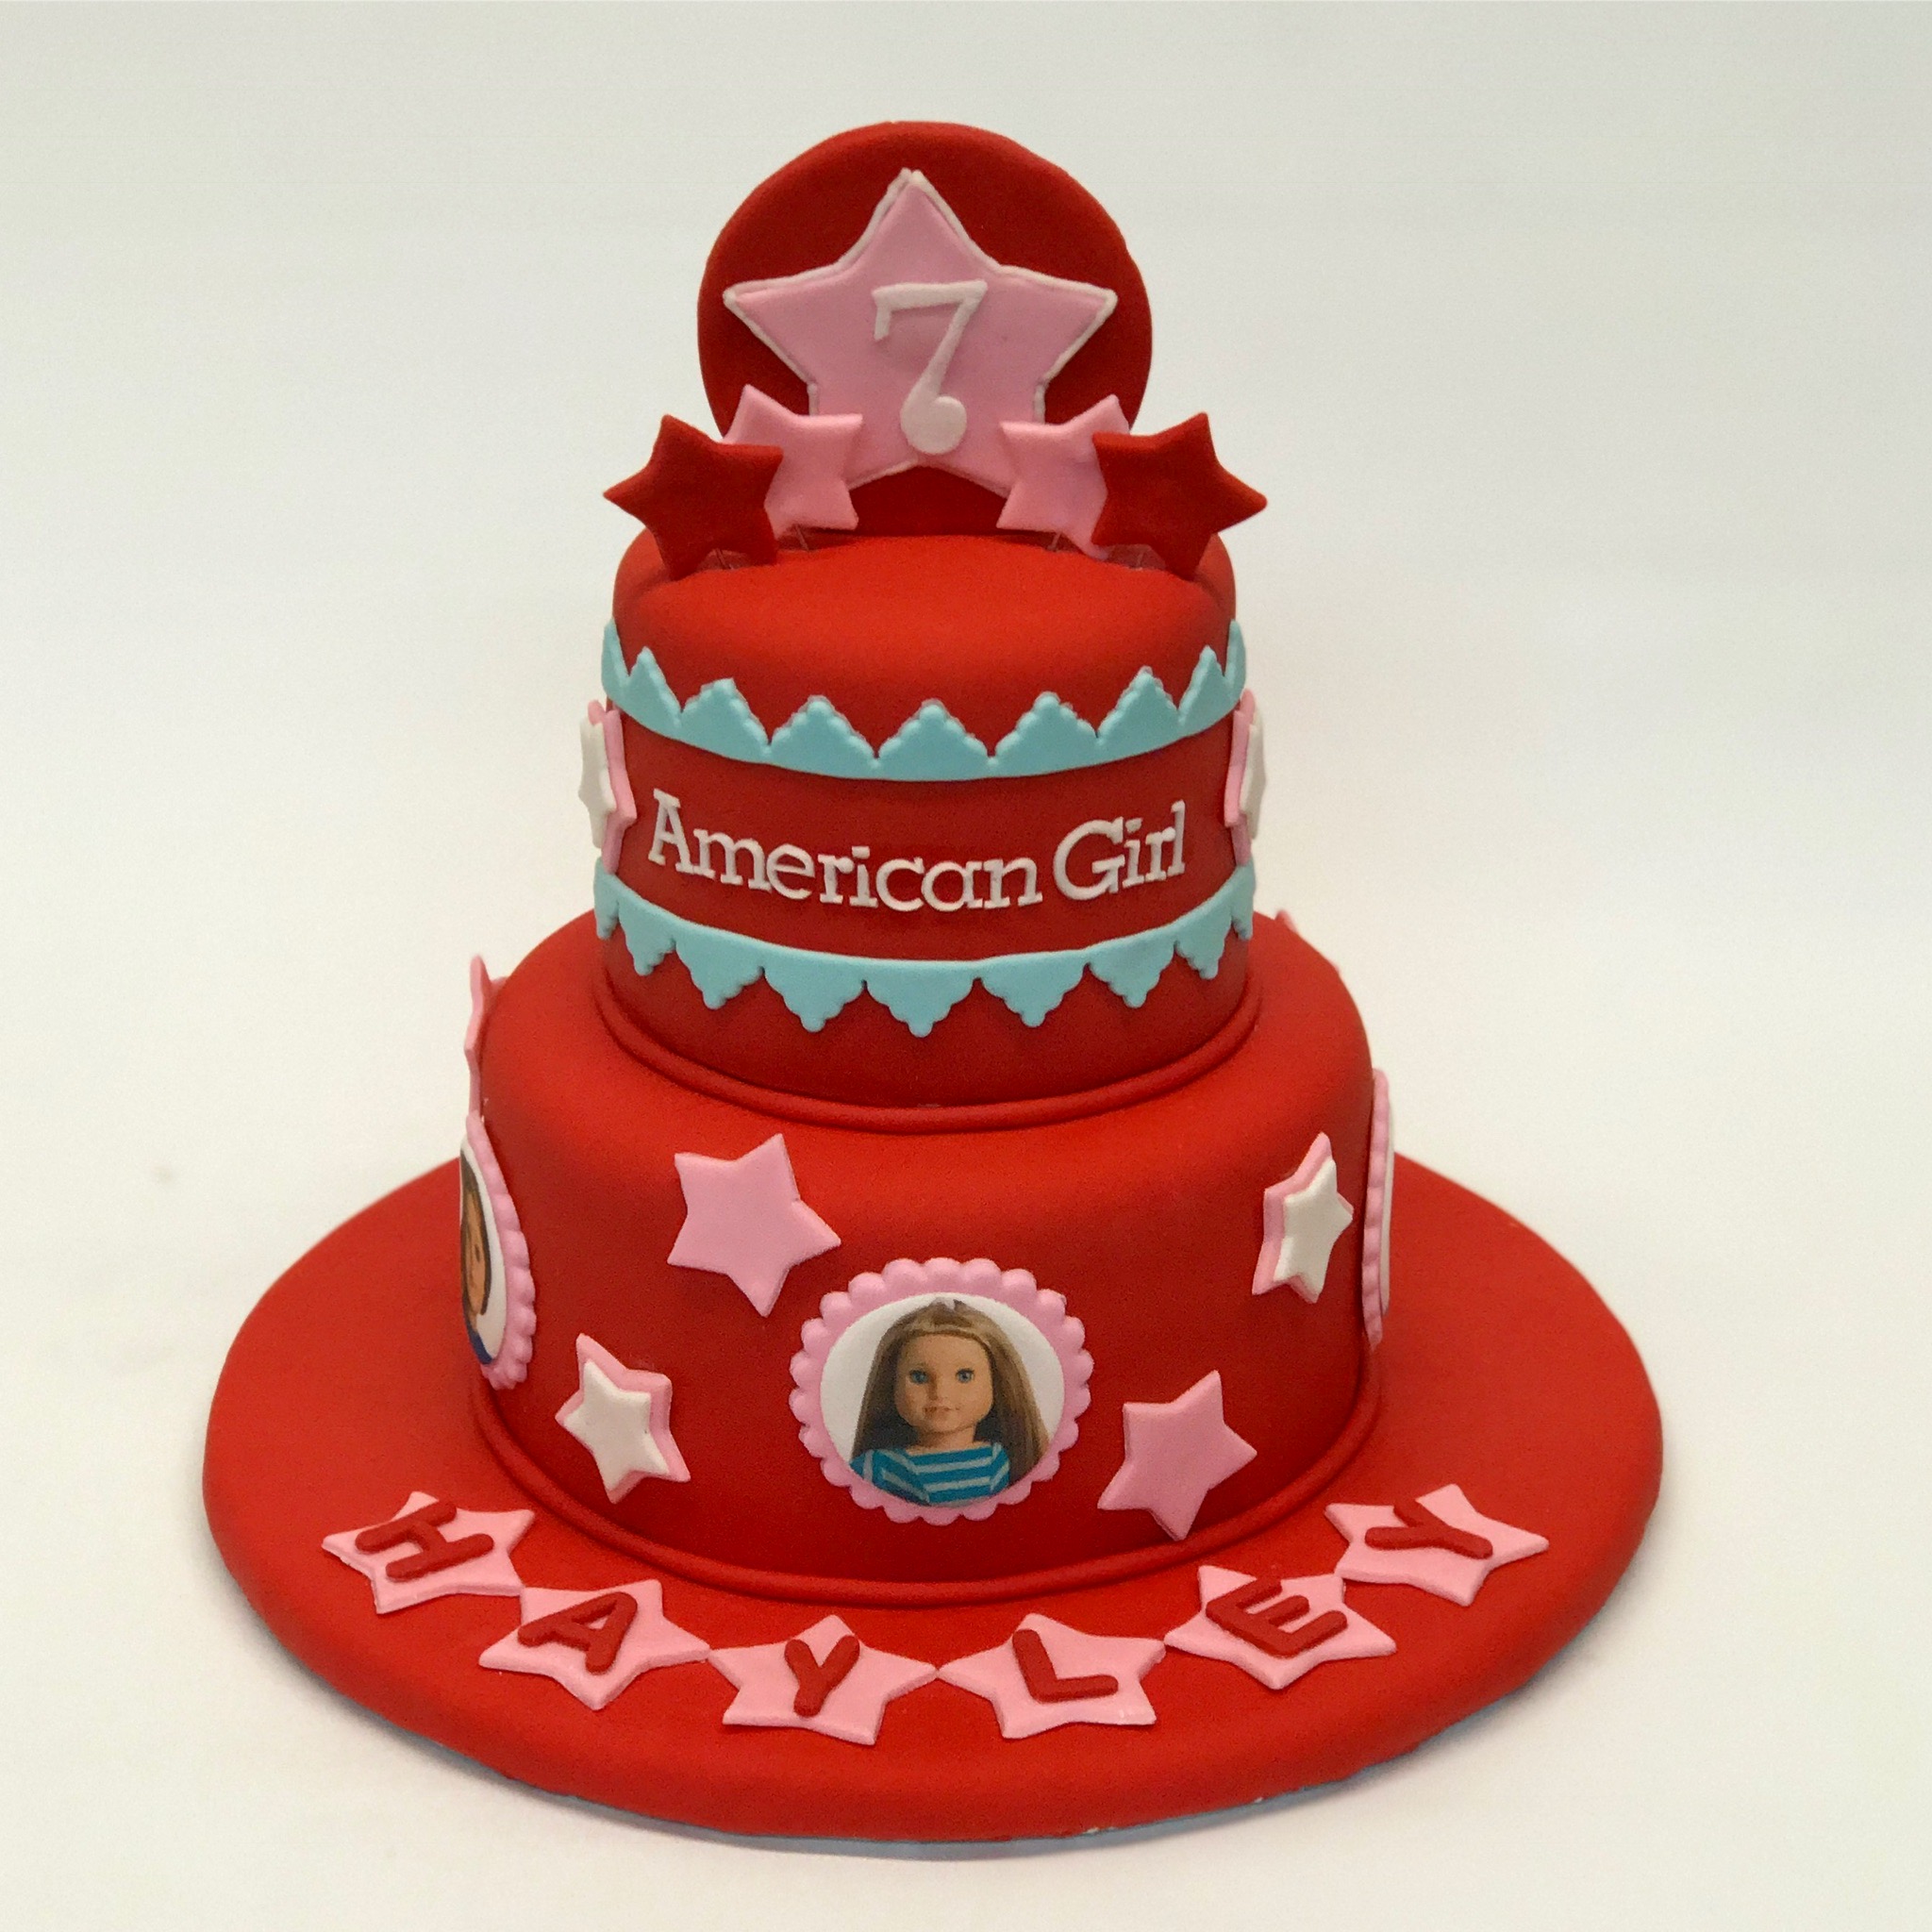 american girl cake | The Mouse Market Blog